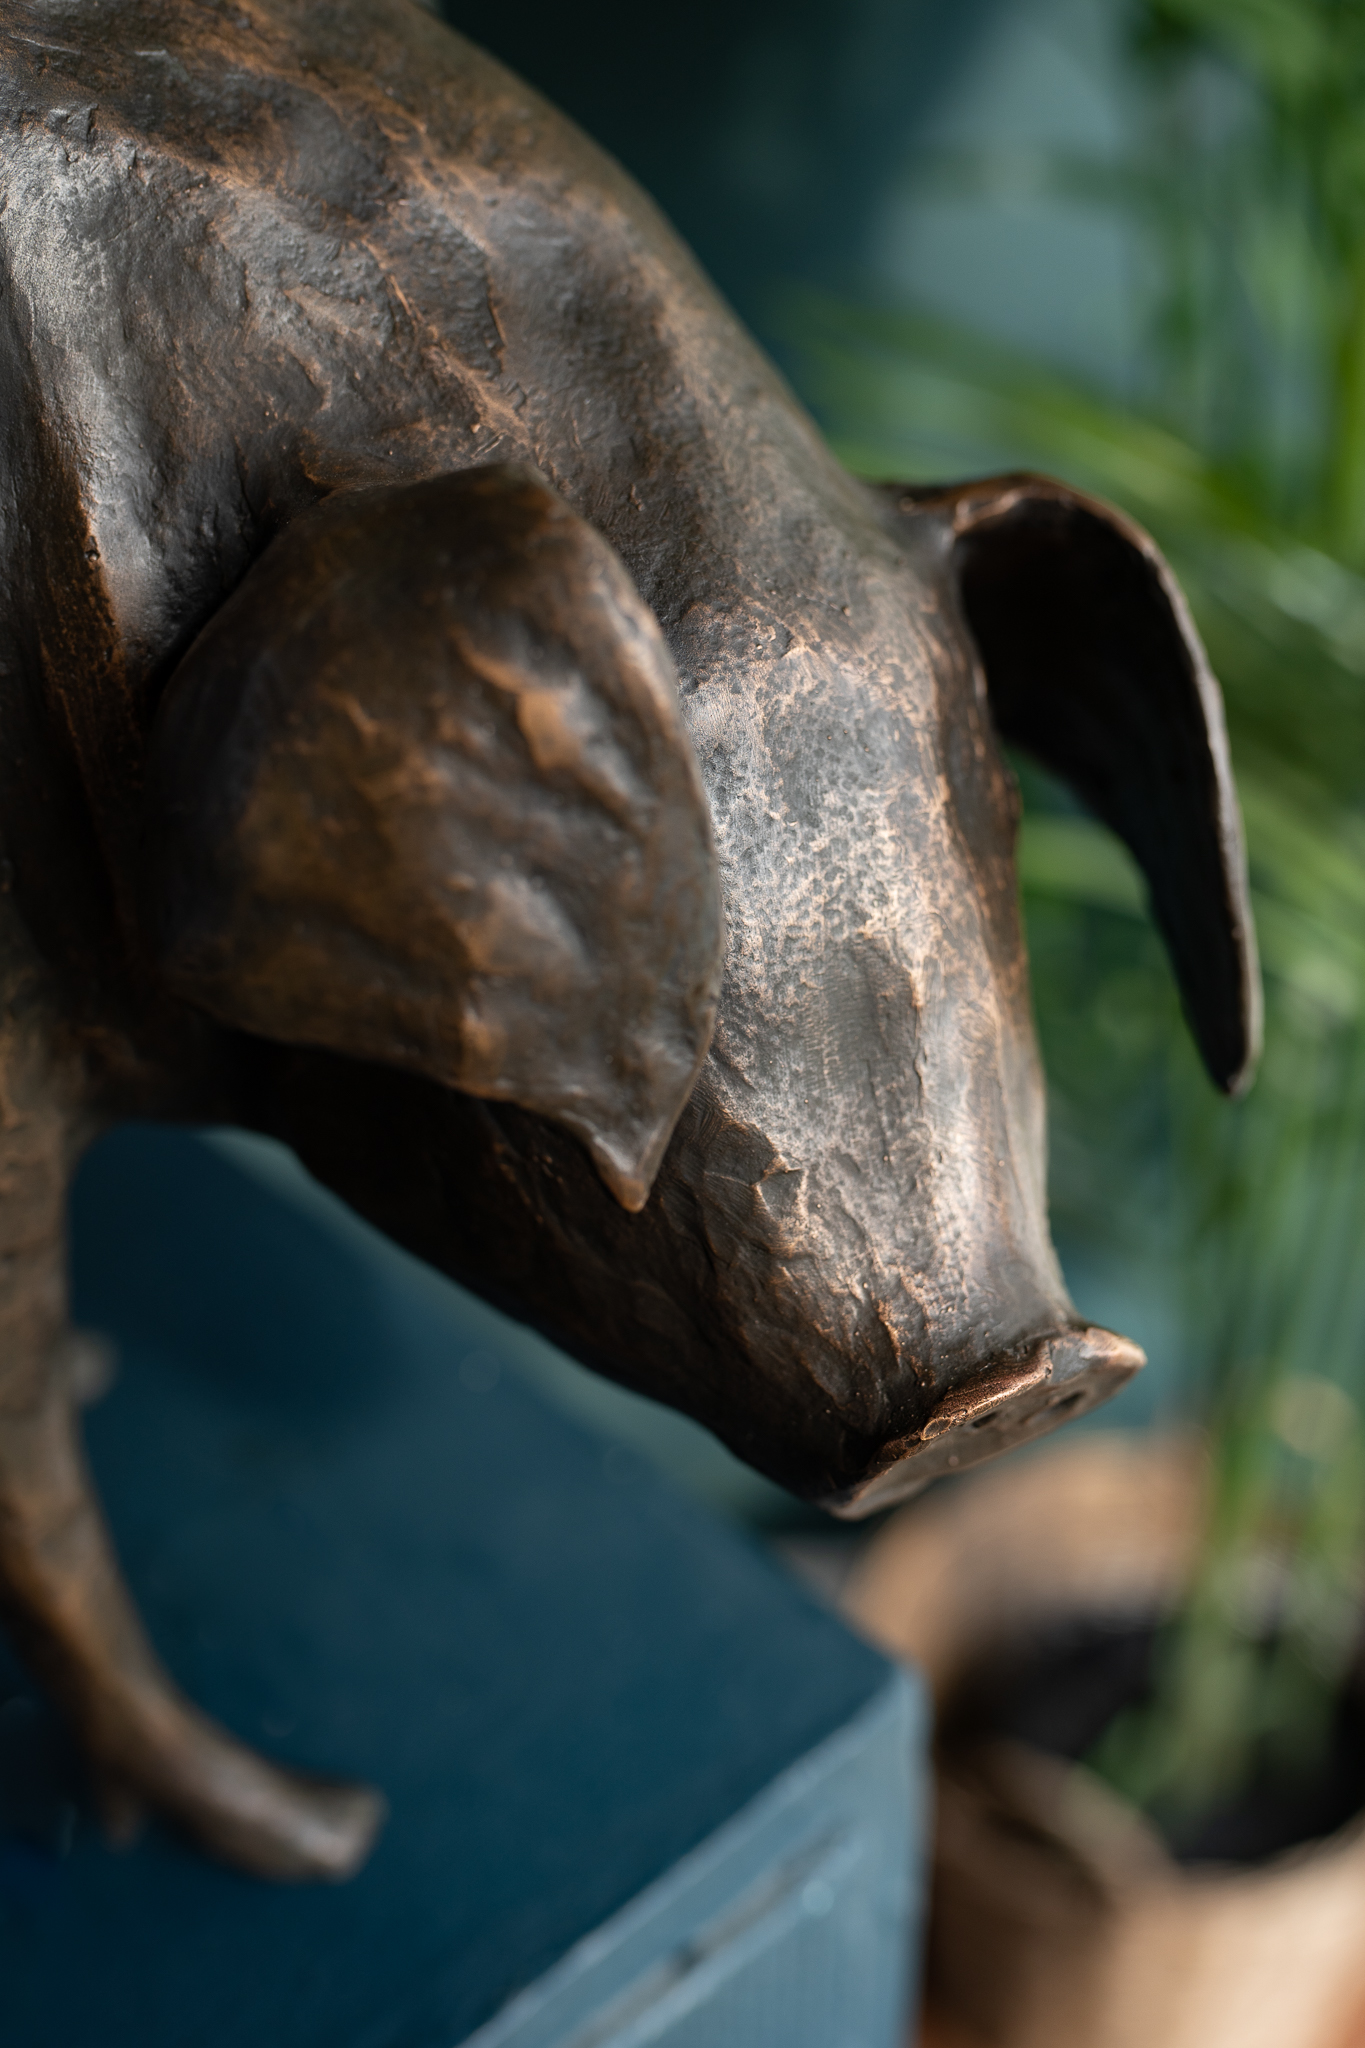 Krys Pomeroy Bronze Pig Kilbaha Gallery Irish Art Sculpture Gallery in Clare